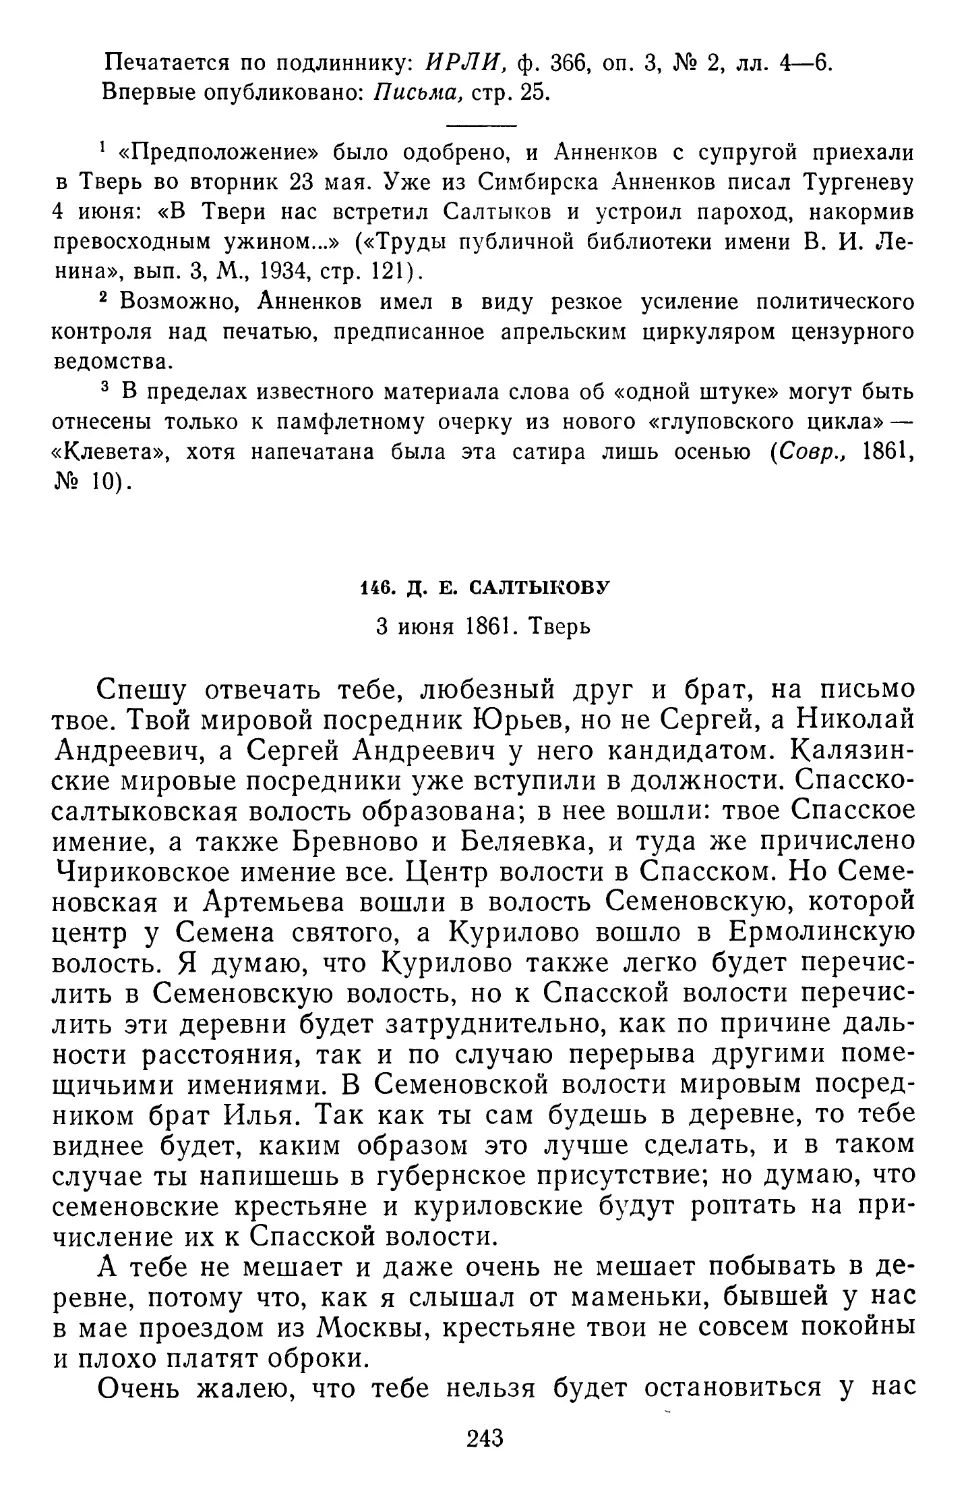 146.Д.Е.Салтыкову.3 июня1861.Тверь